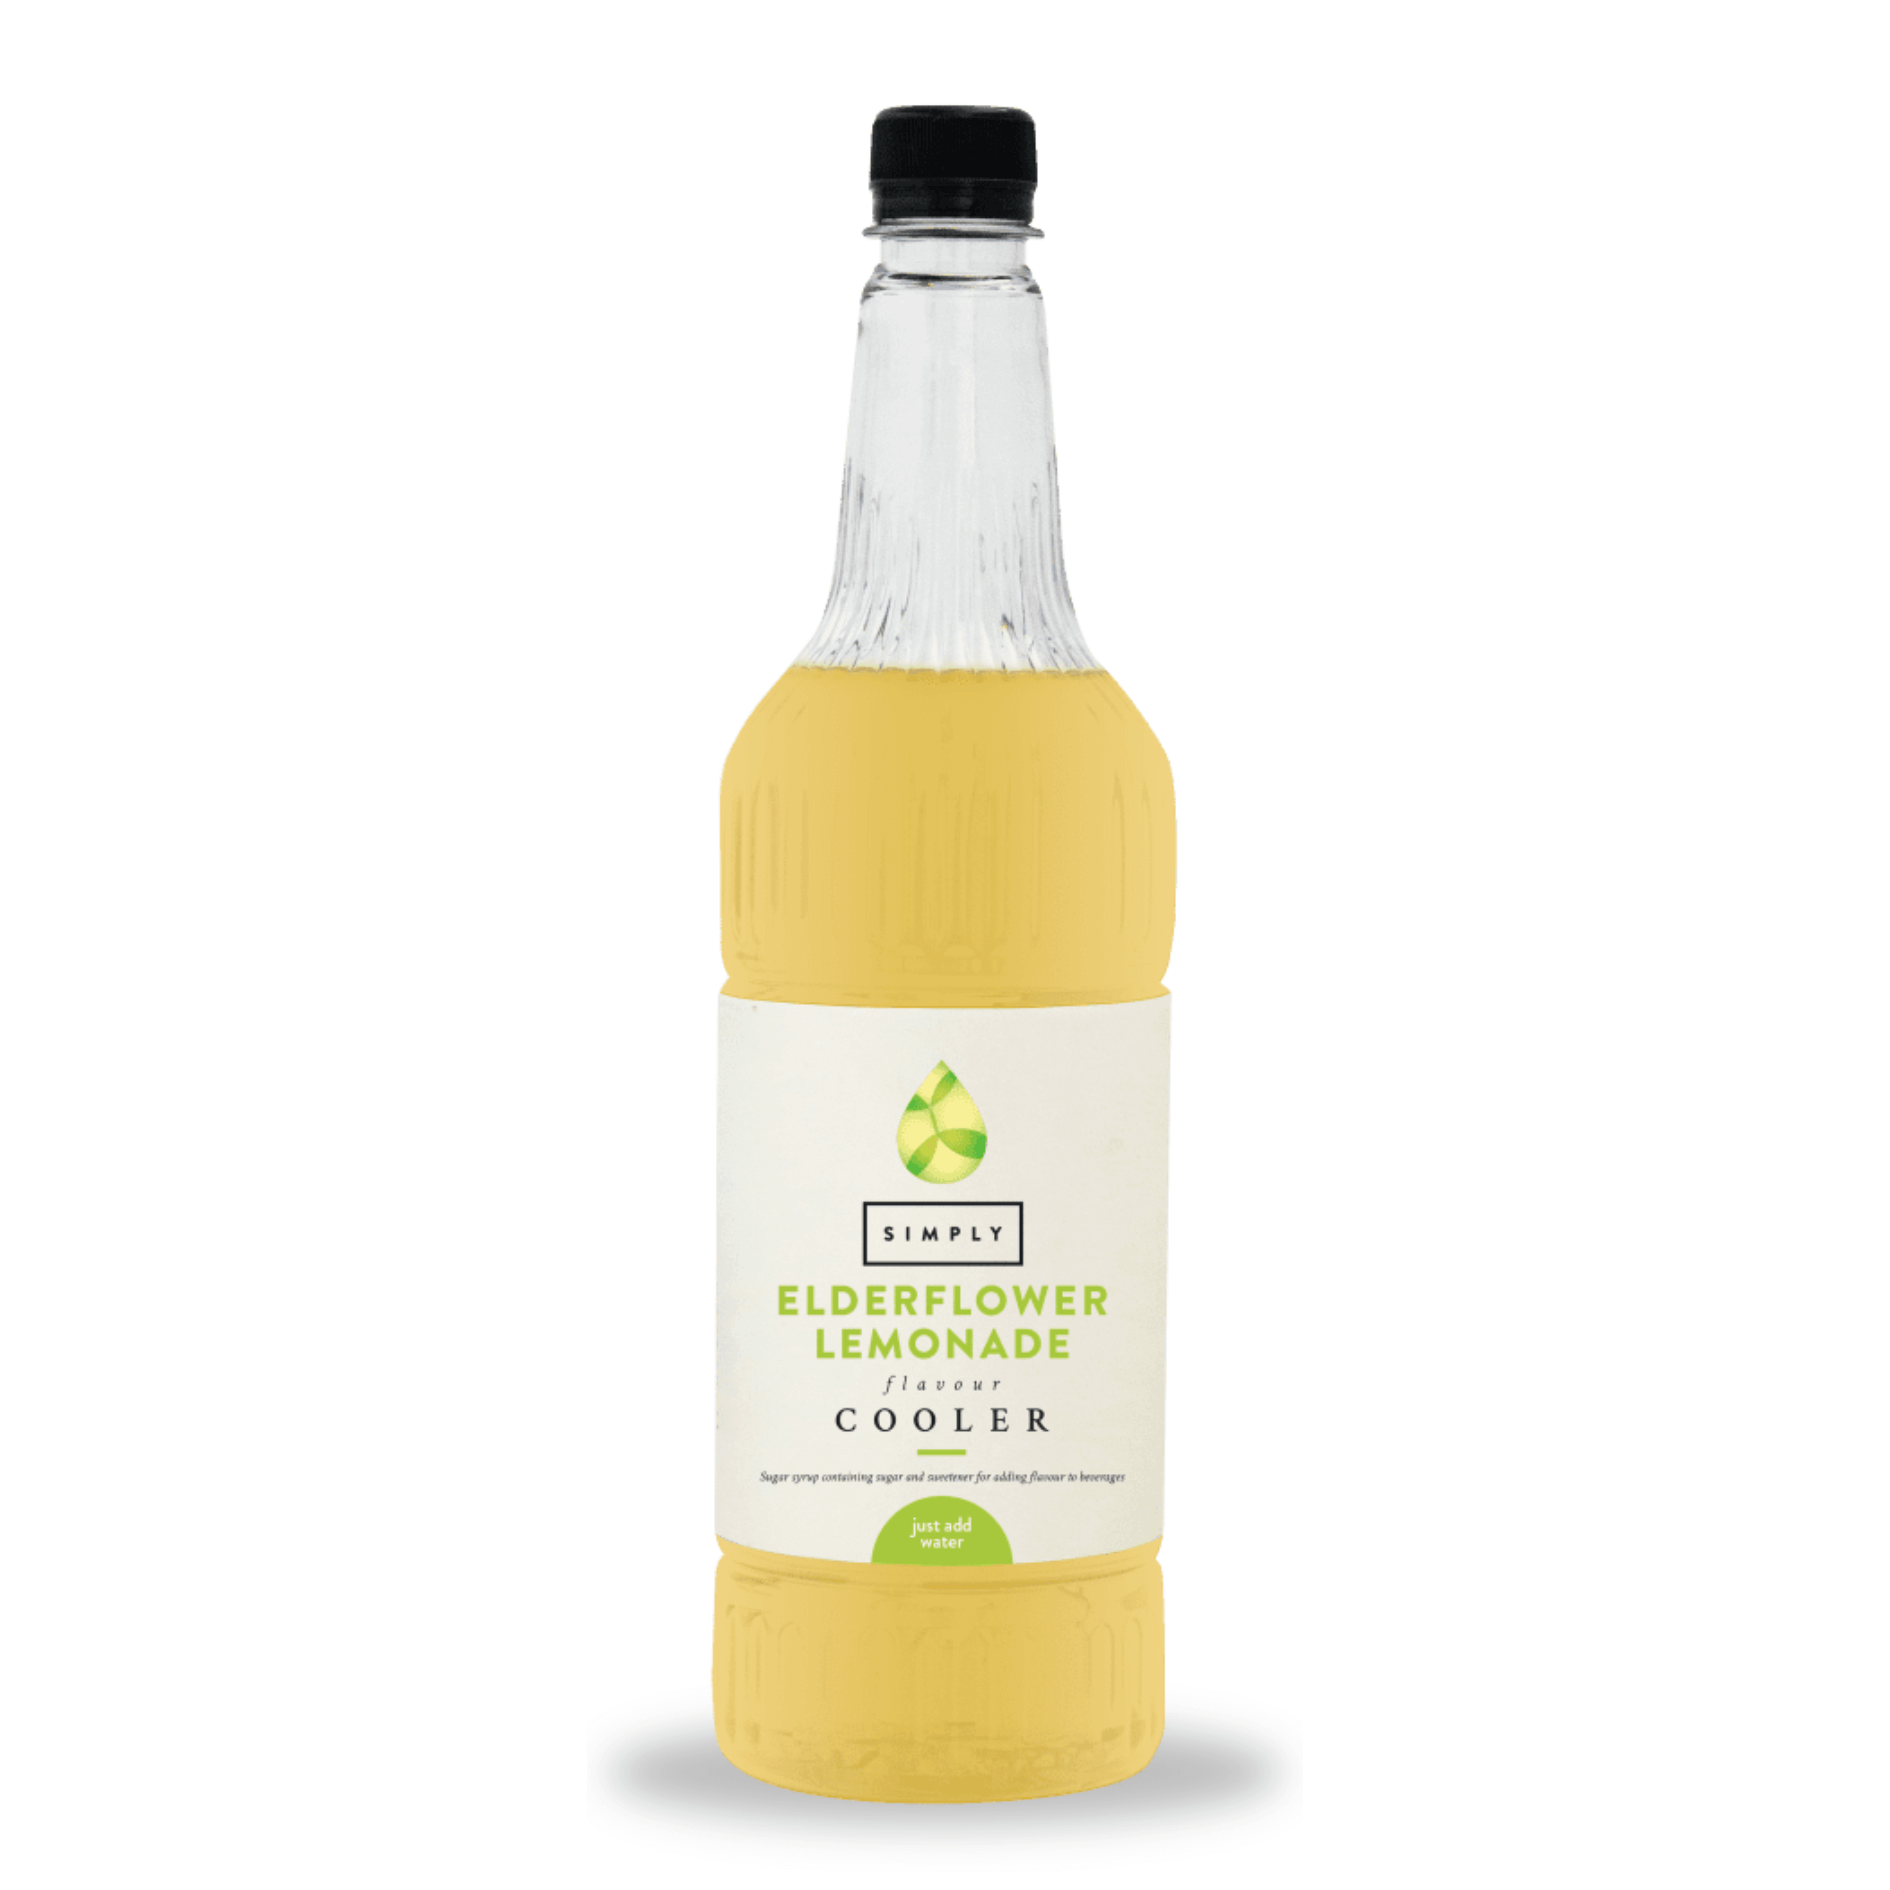 Simply Elderflower Lemonade Cooler Syrup (1 Litre)